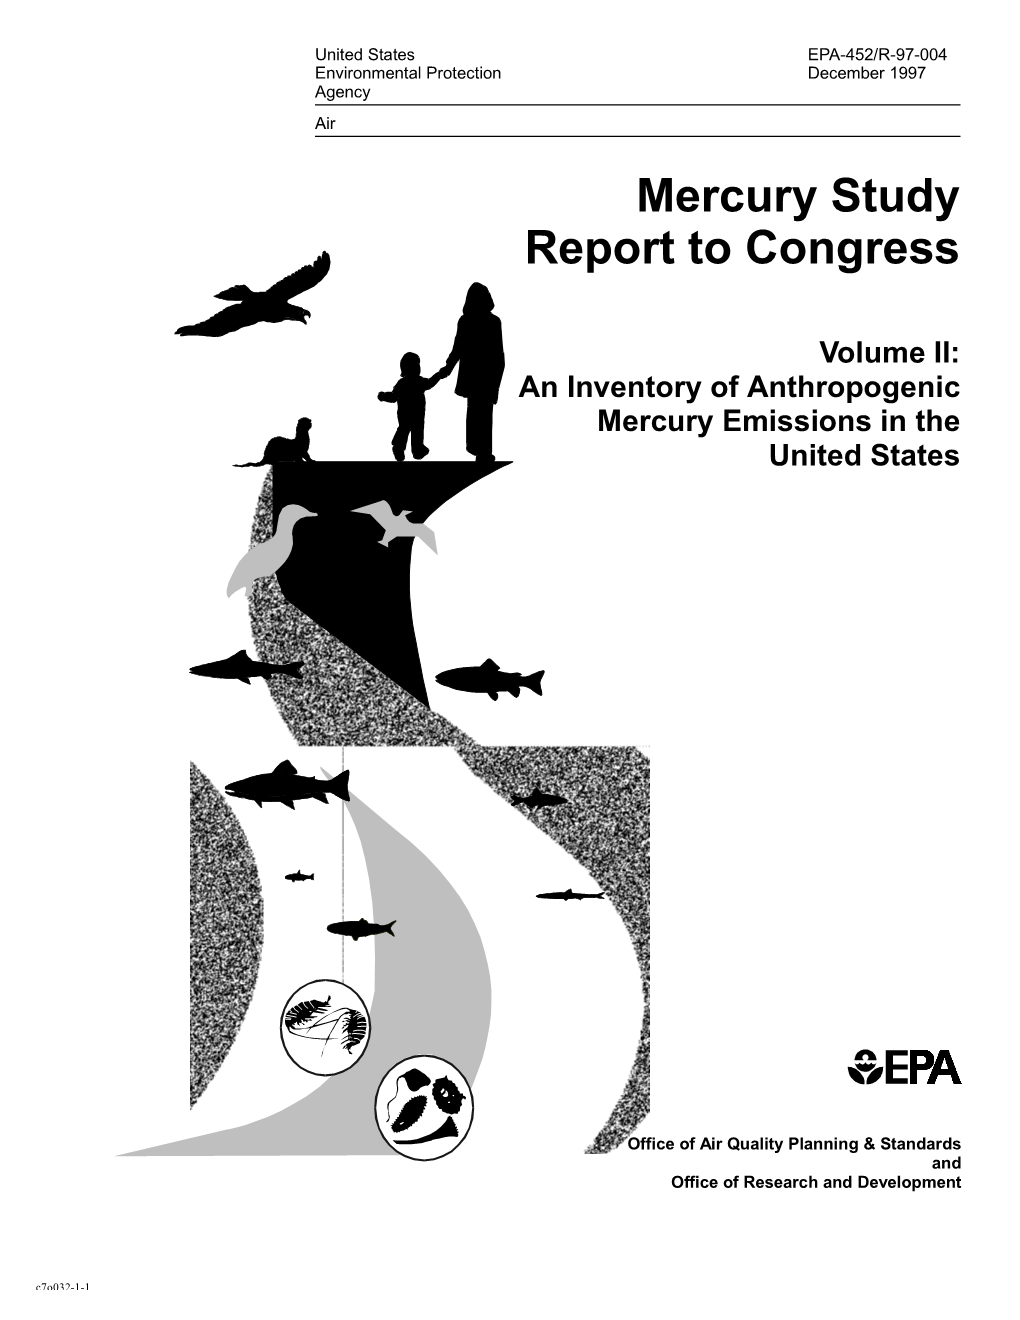 Mercury Study Report to Congress, Volume II